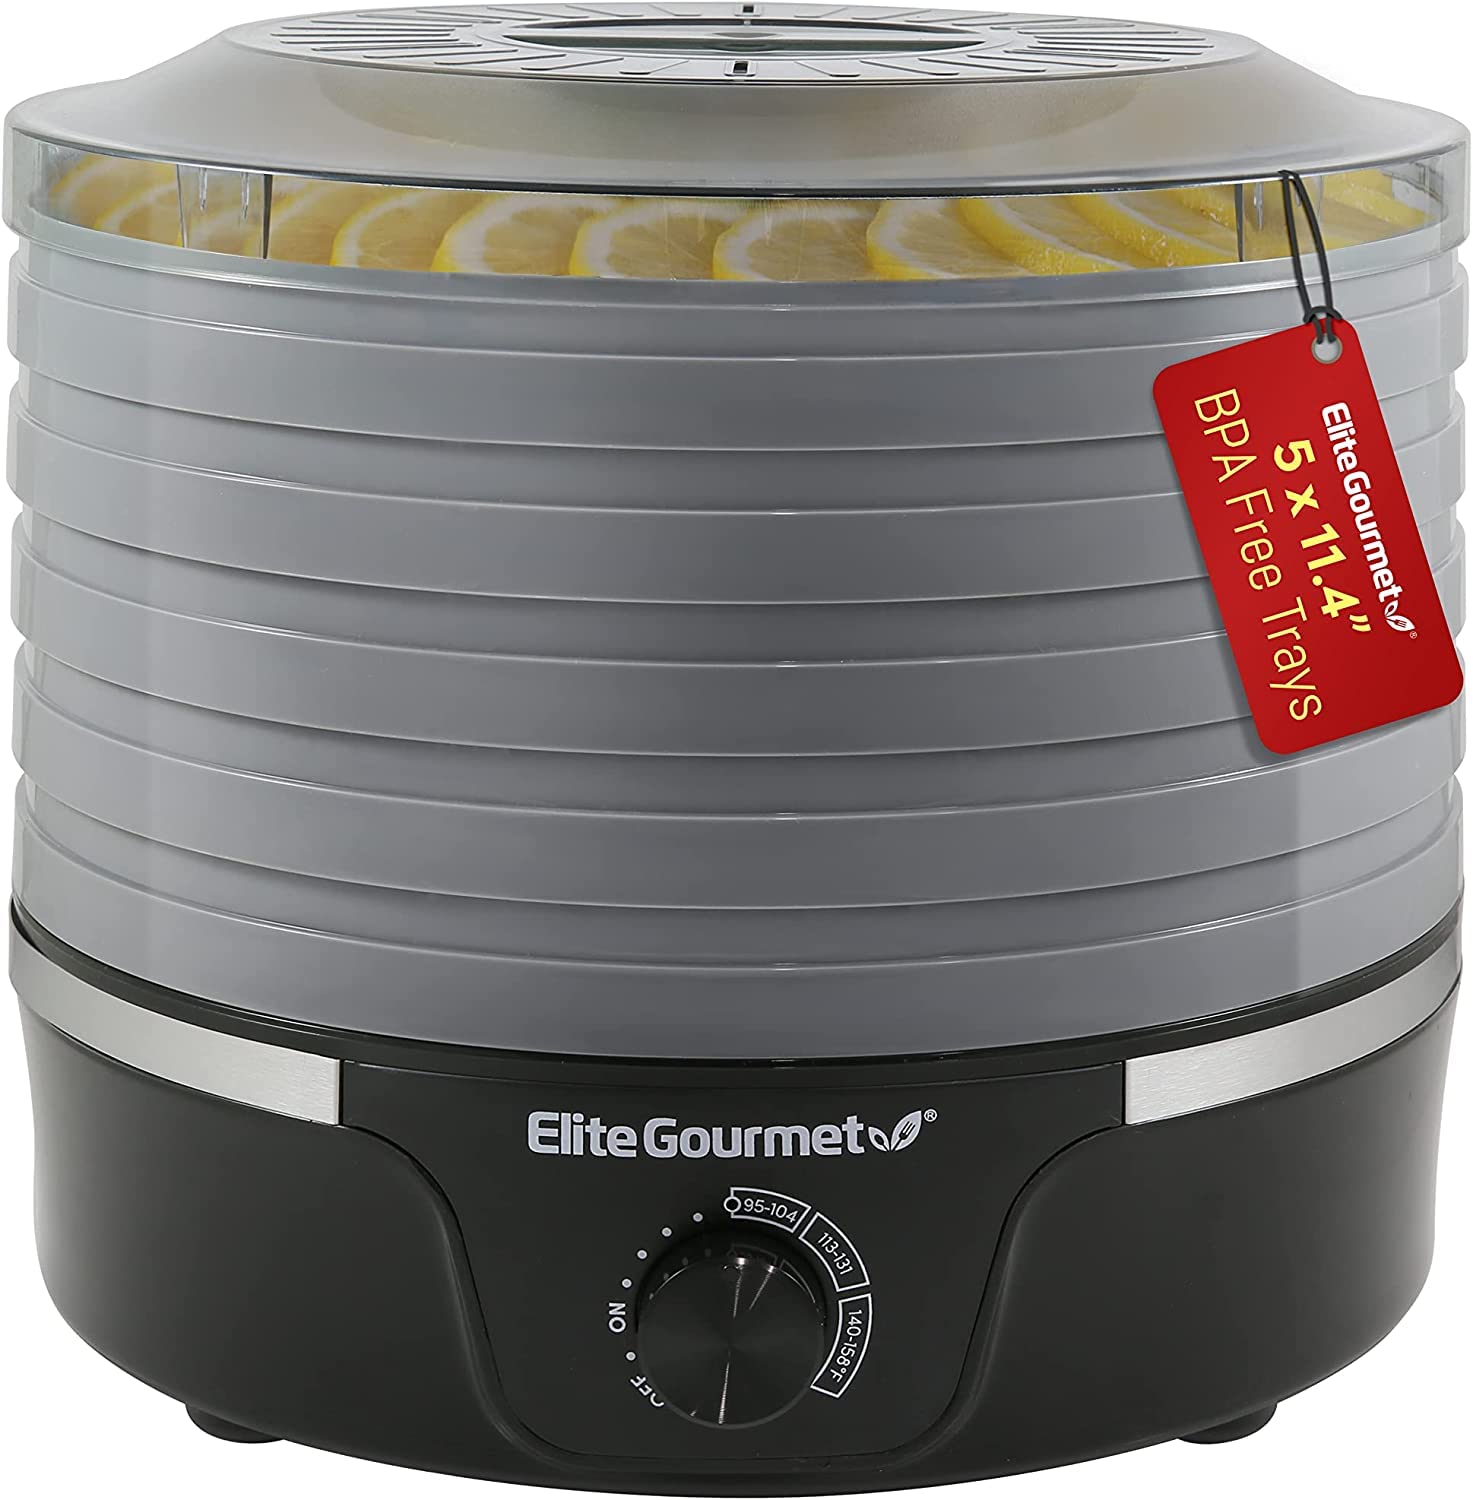 Elite gourmet EFD319BNg Food Dehydrator, 5 BPA-Free 114 Trays Adjustable Temperature controls, Jerky, Herbs, Fruit, Veggies, Dri